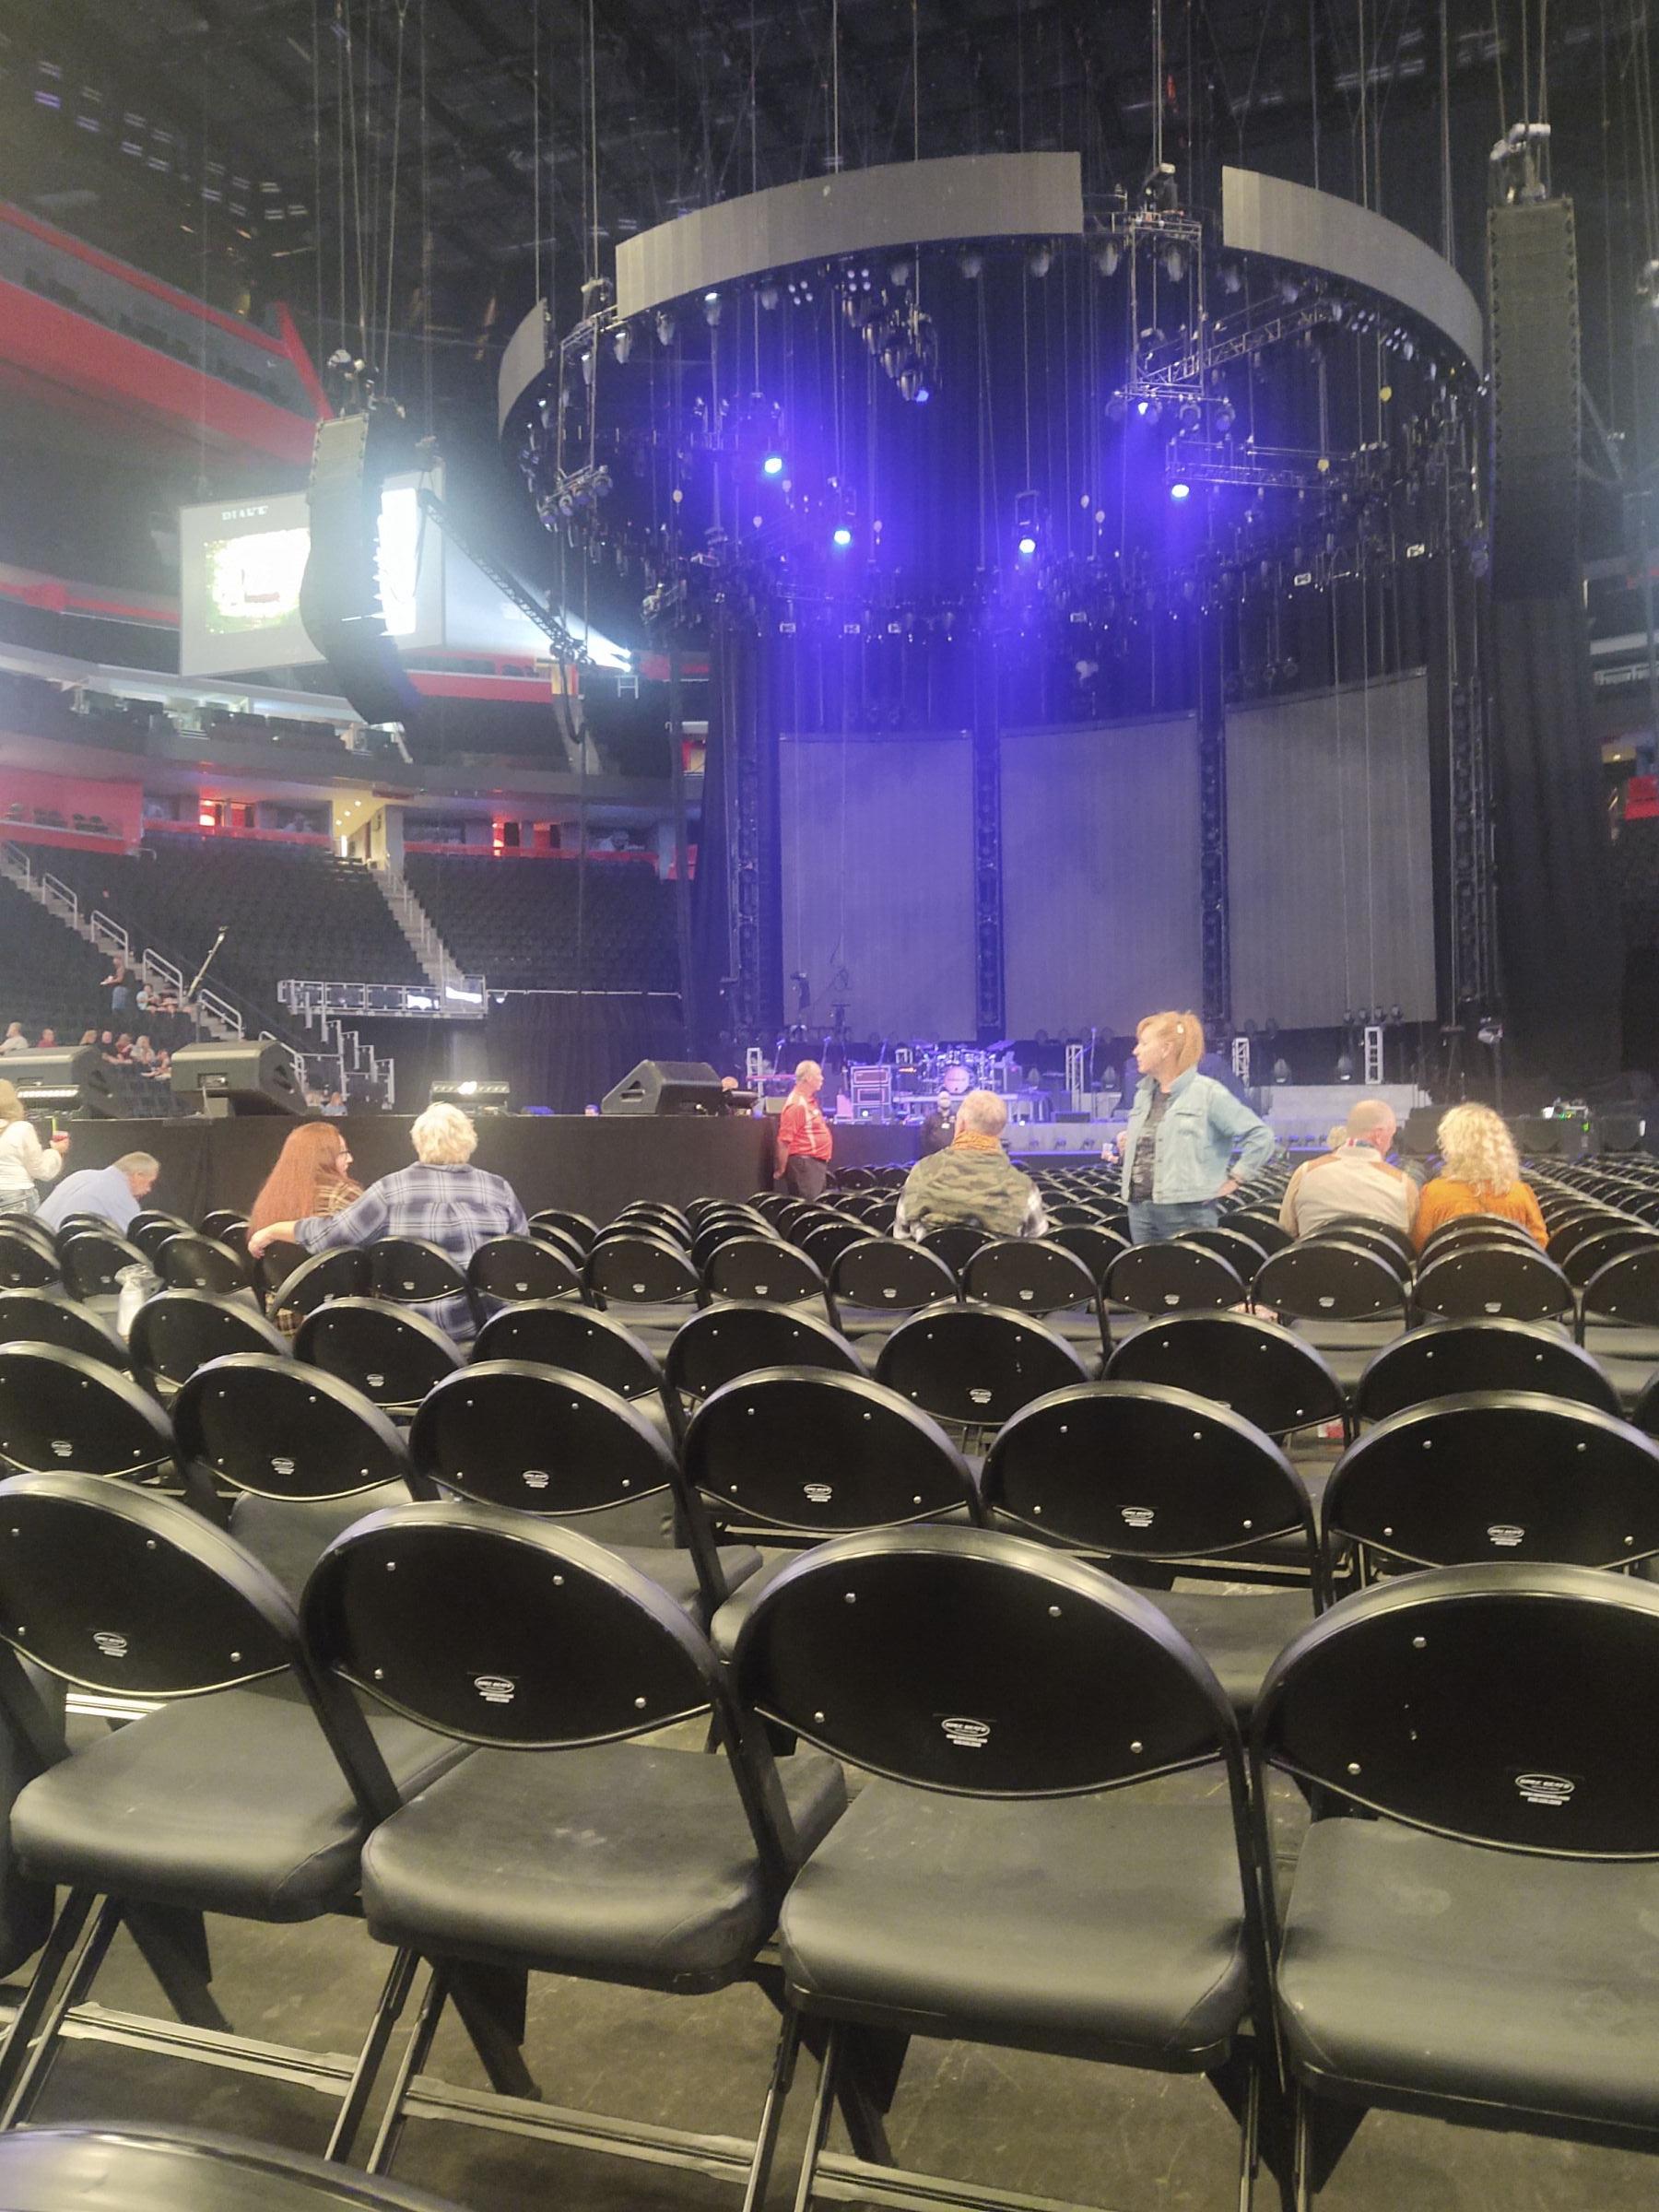 floor 4, row 5 seat view  for concert - little caesars arena